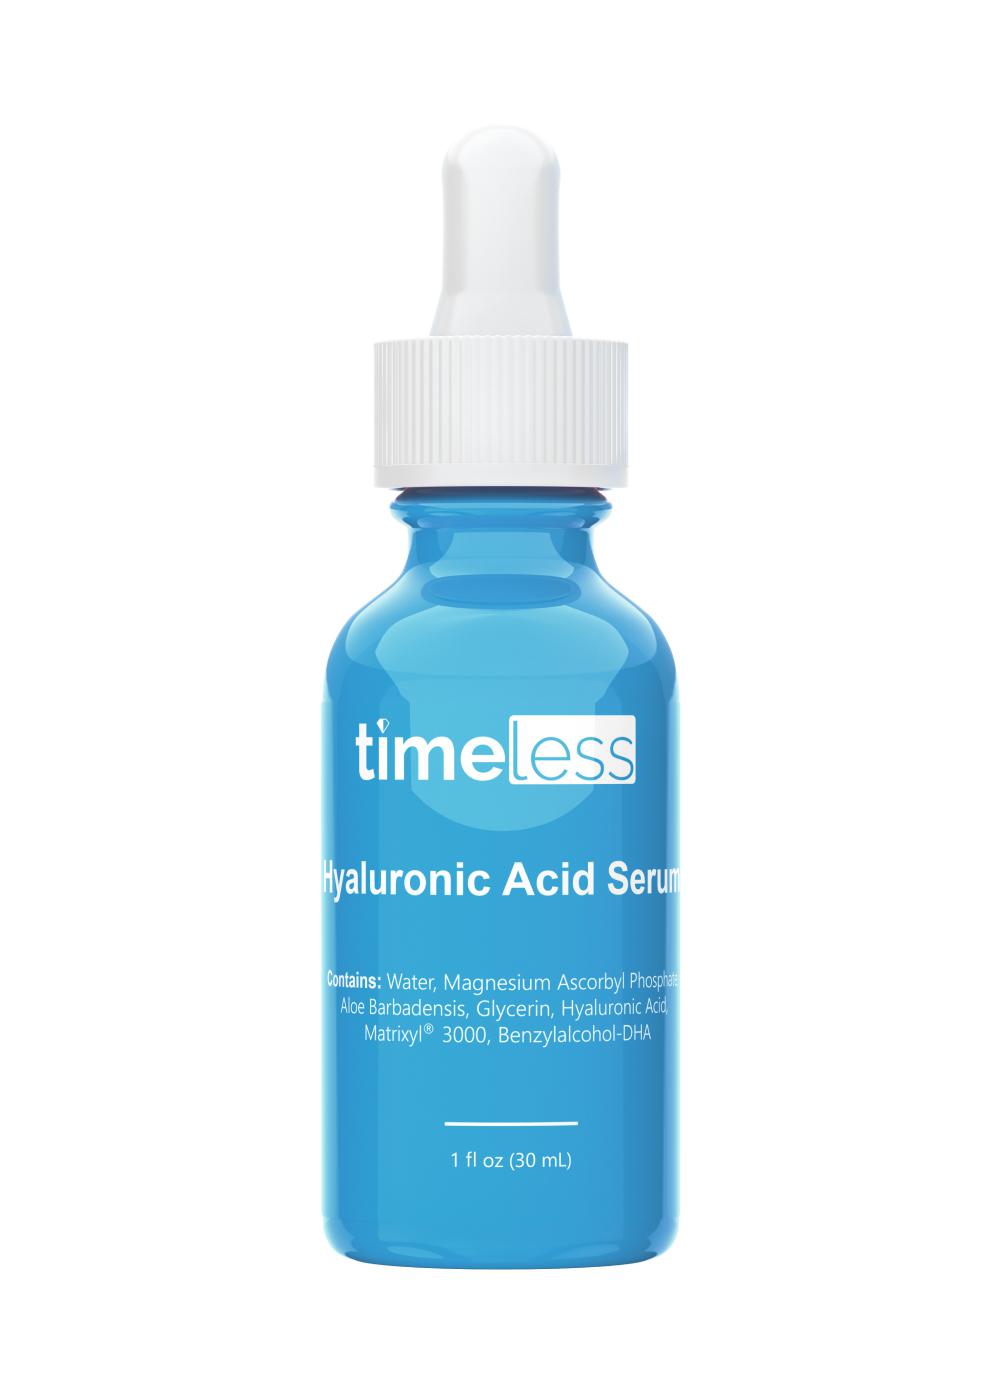 Сыворотка Hyaluronic Acid Vitamin C, Timeless Skin Care, 3493 руб. (Foam)